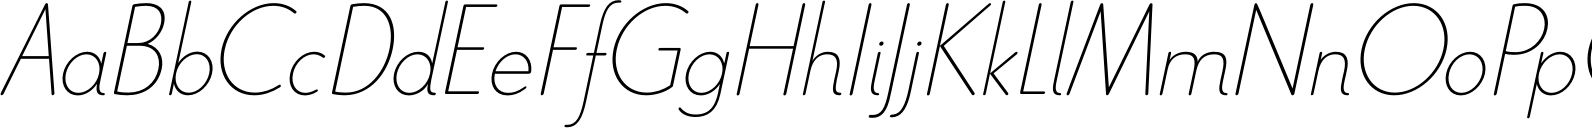 Le Havre Rounded Thin Italic Font OpenType